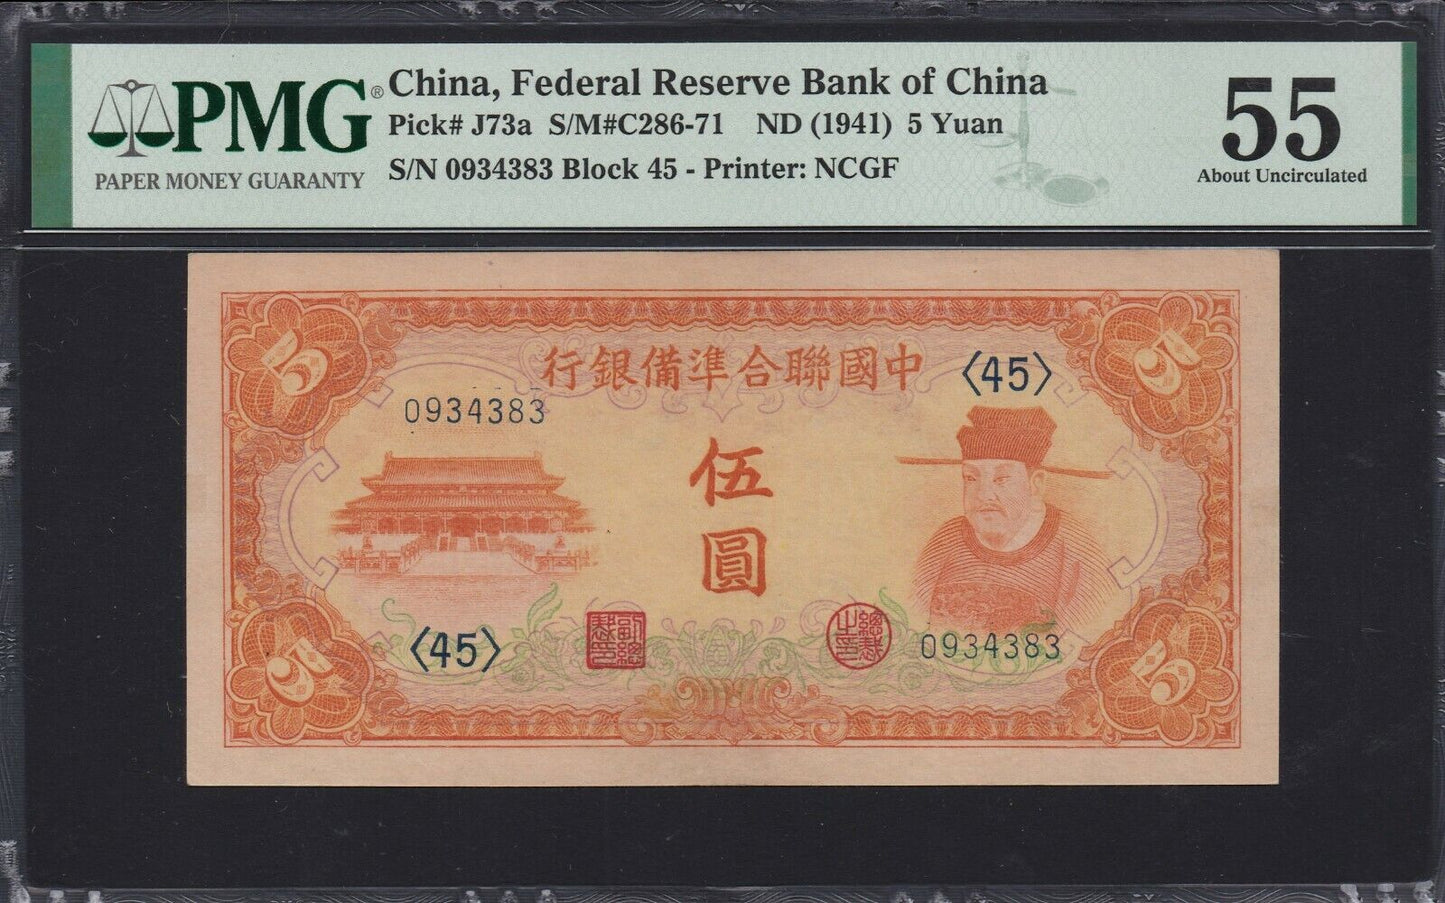 CHINE - Federal Reserve Bank of China, 5 Yuan (1941) P.J73a PMG AU 55 / pr.NEUF